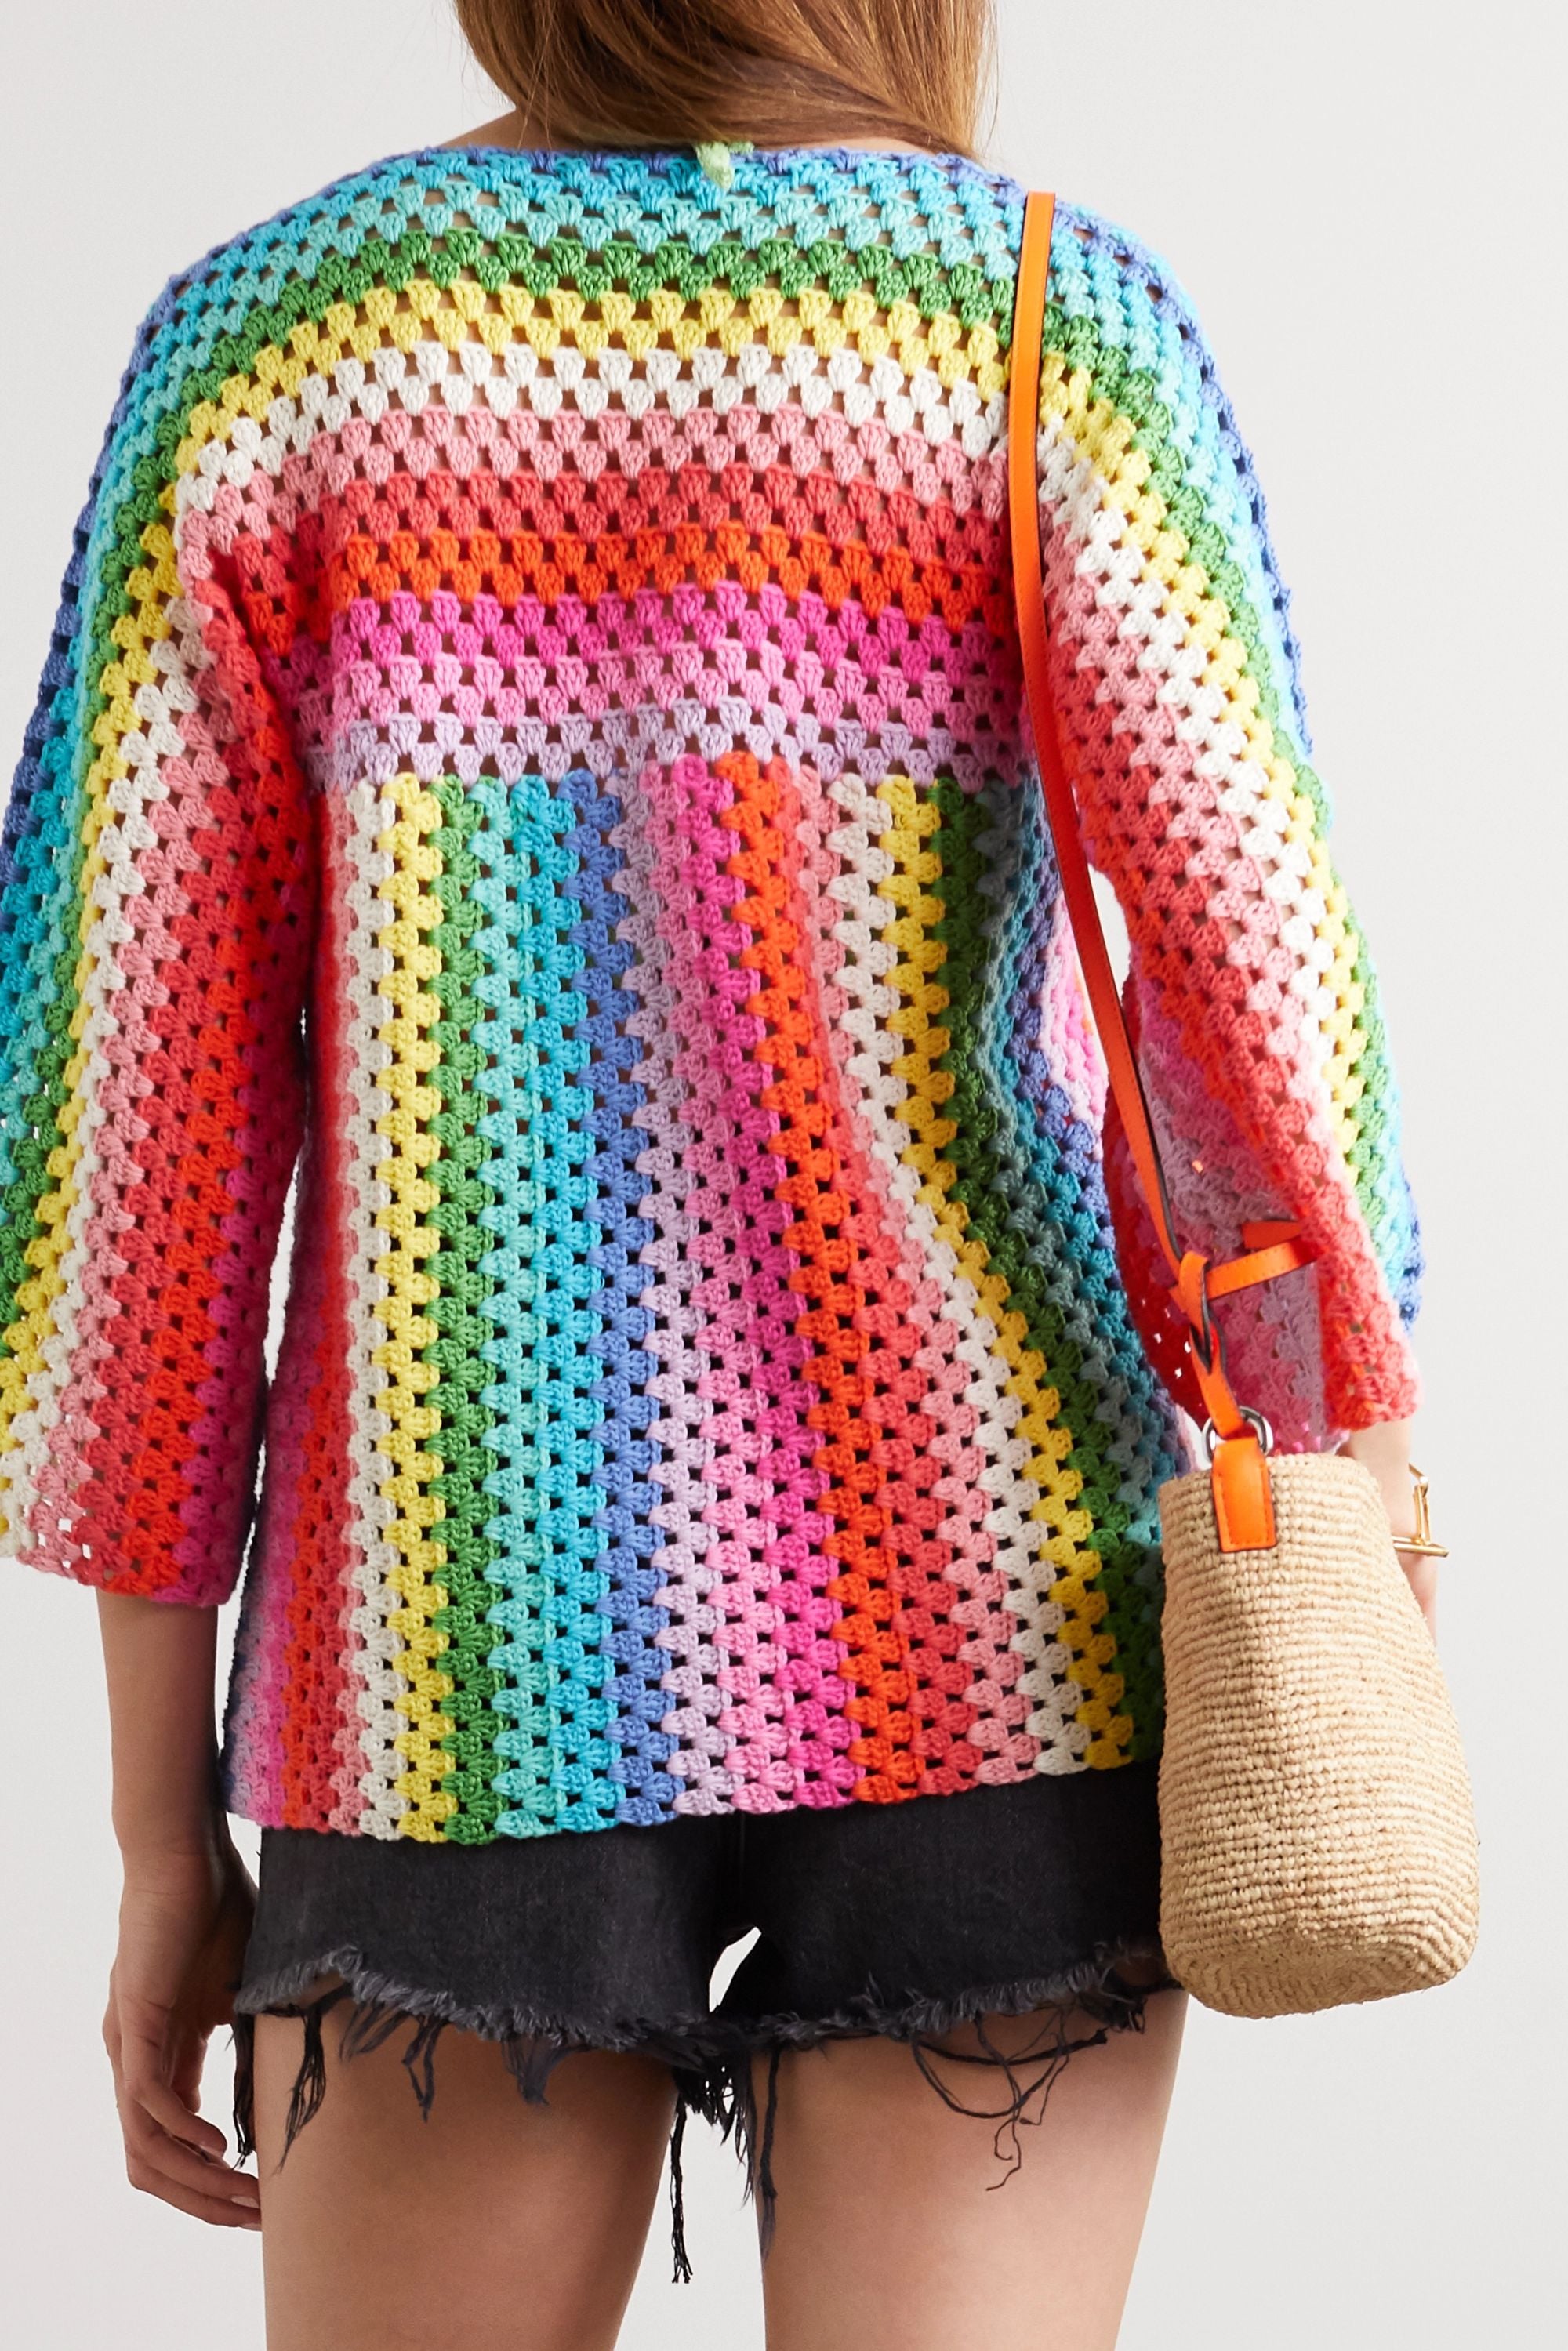 Harry Styles's Cardigan Has Inspired a Crocheting TikTok Trend